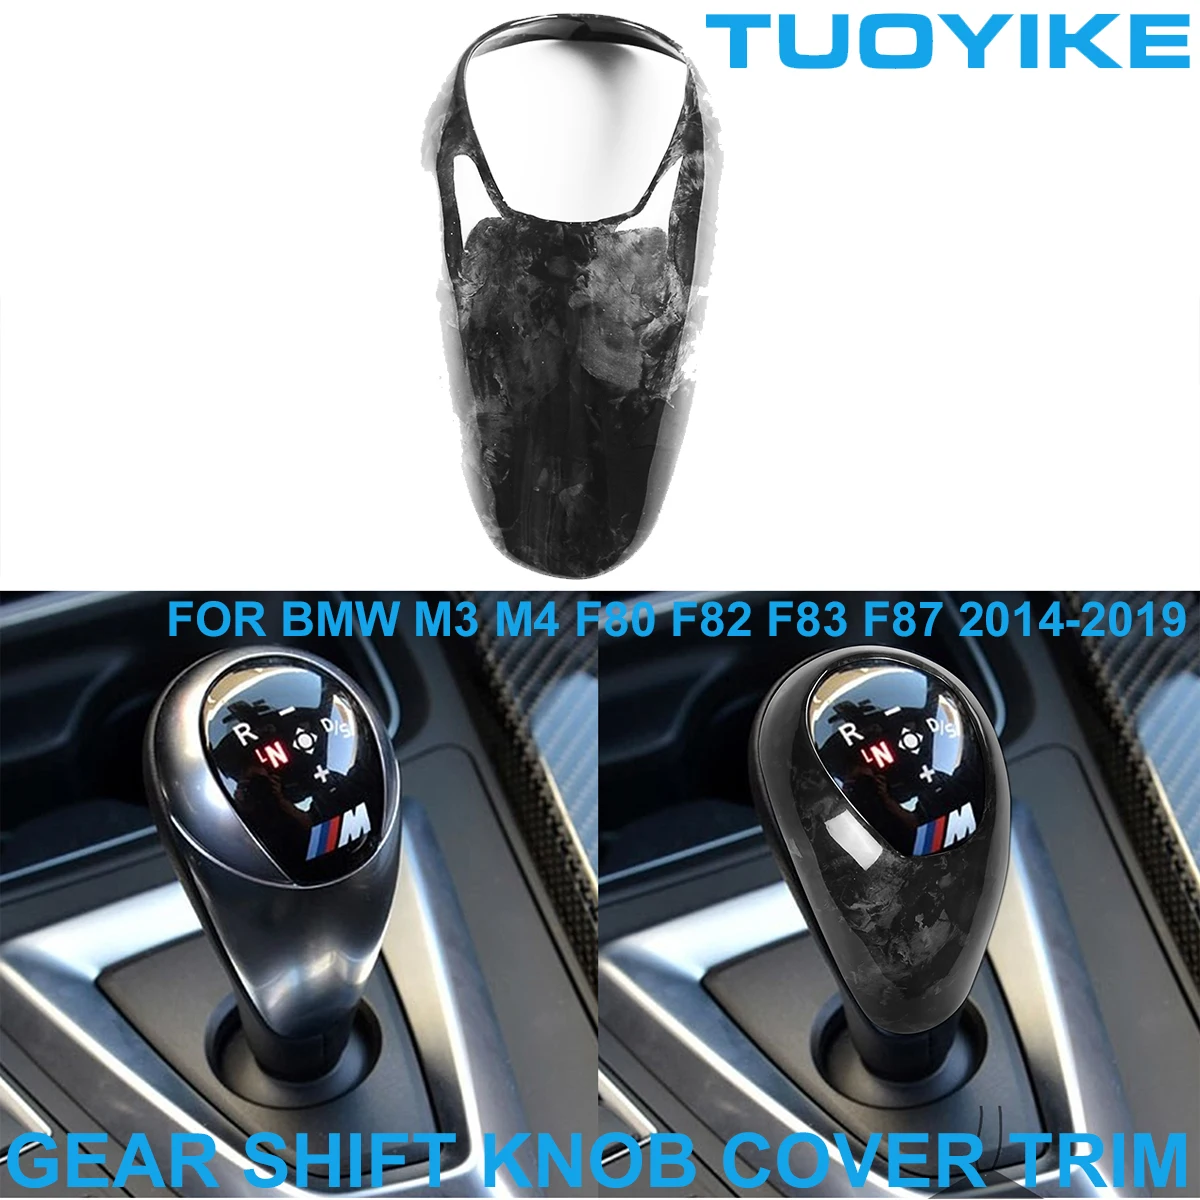 

LHD RHD Car Styling Real Dry Forged Carbon Fiber Gear Shift Knob Cover Trim Sticker For BMW M3 M4 F80 F82 F83 F87 2014-2019